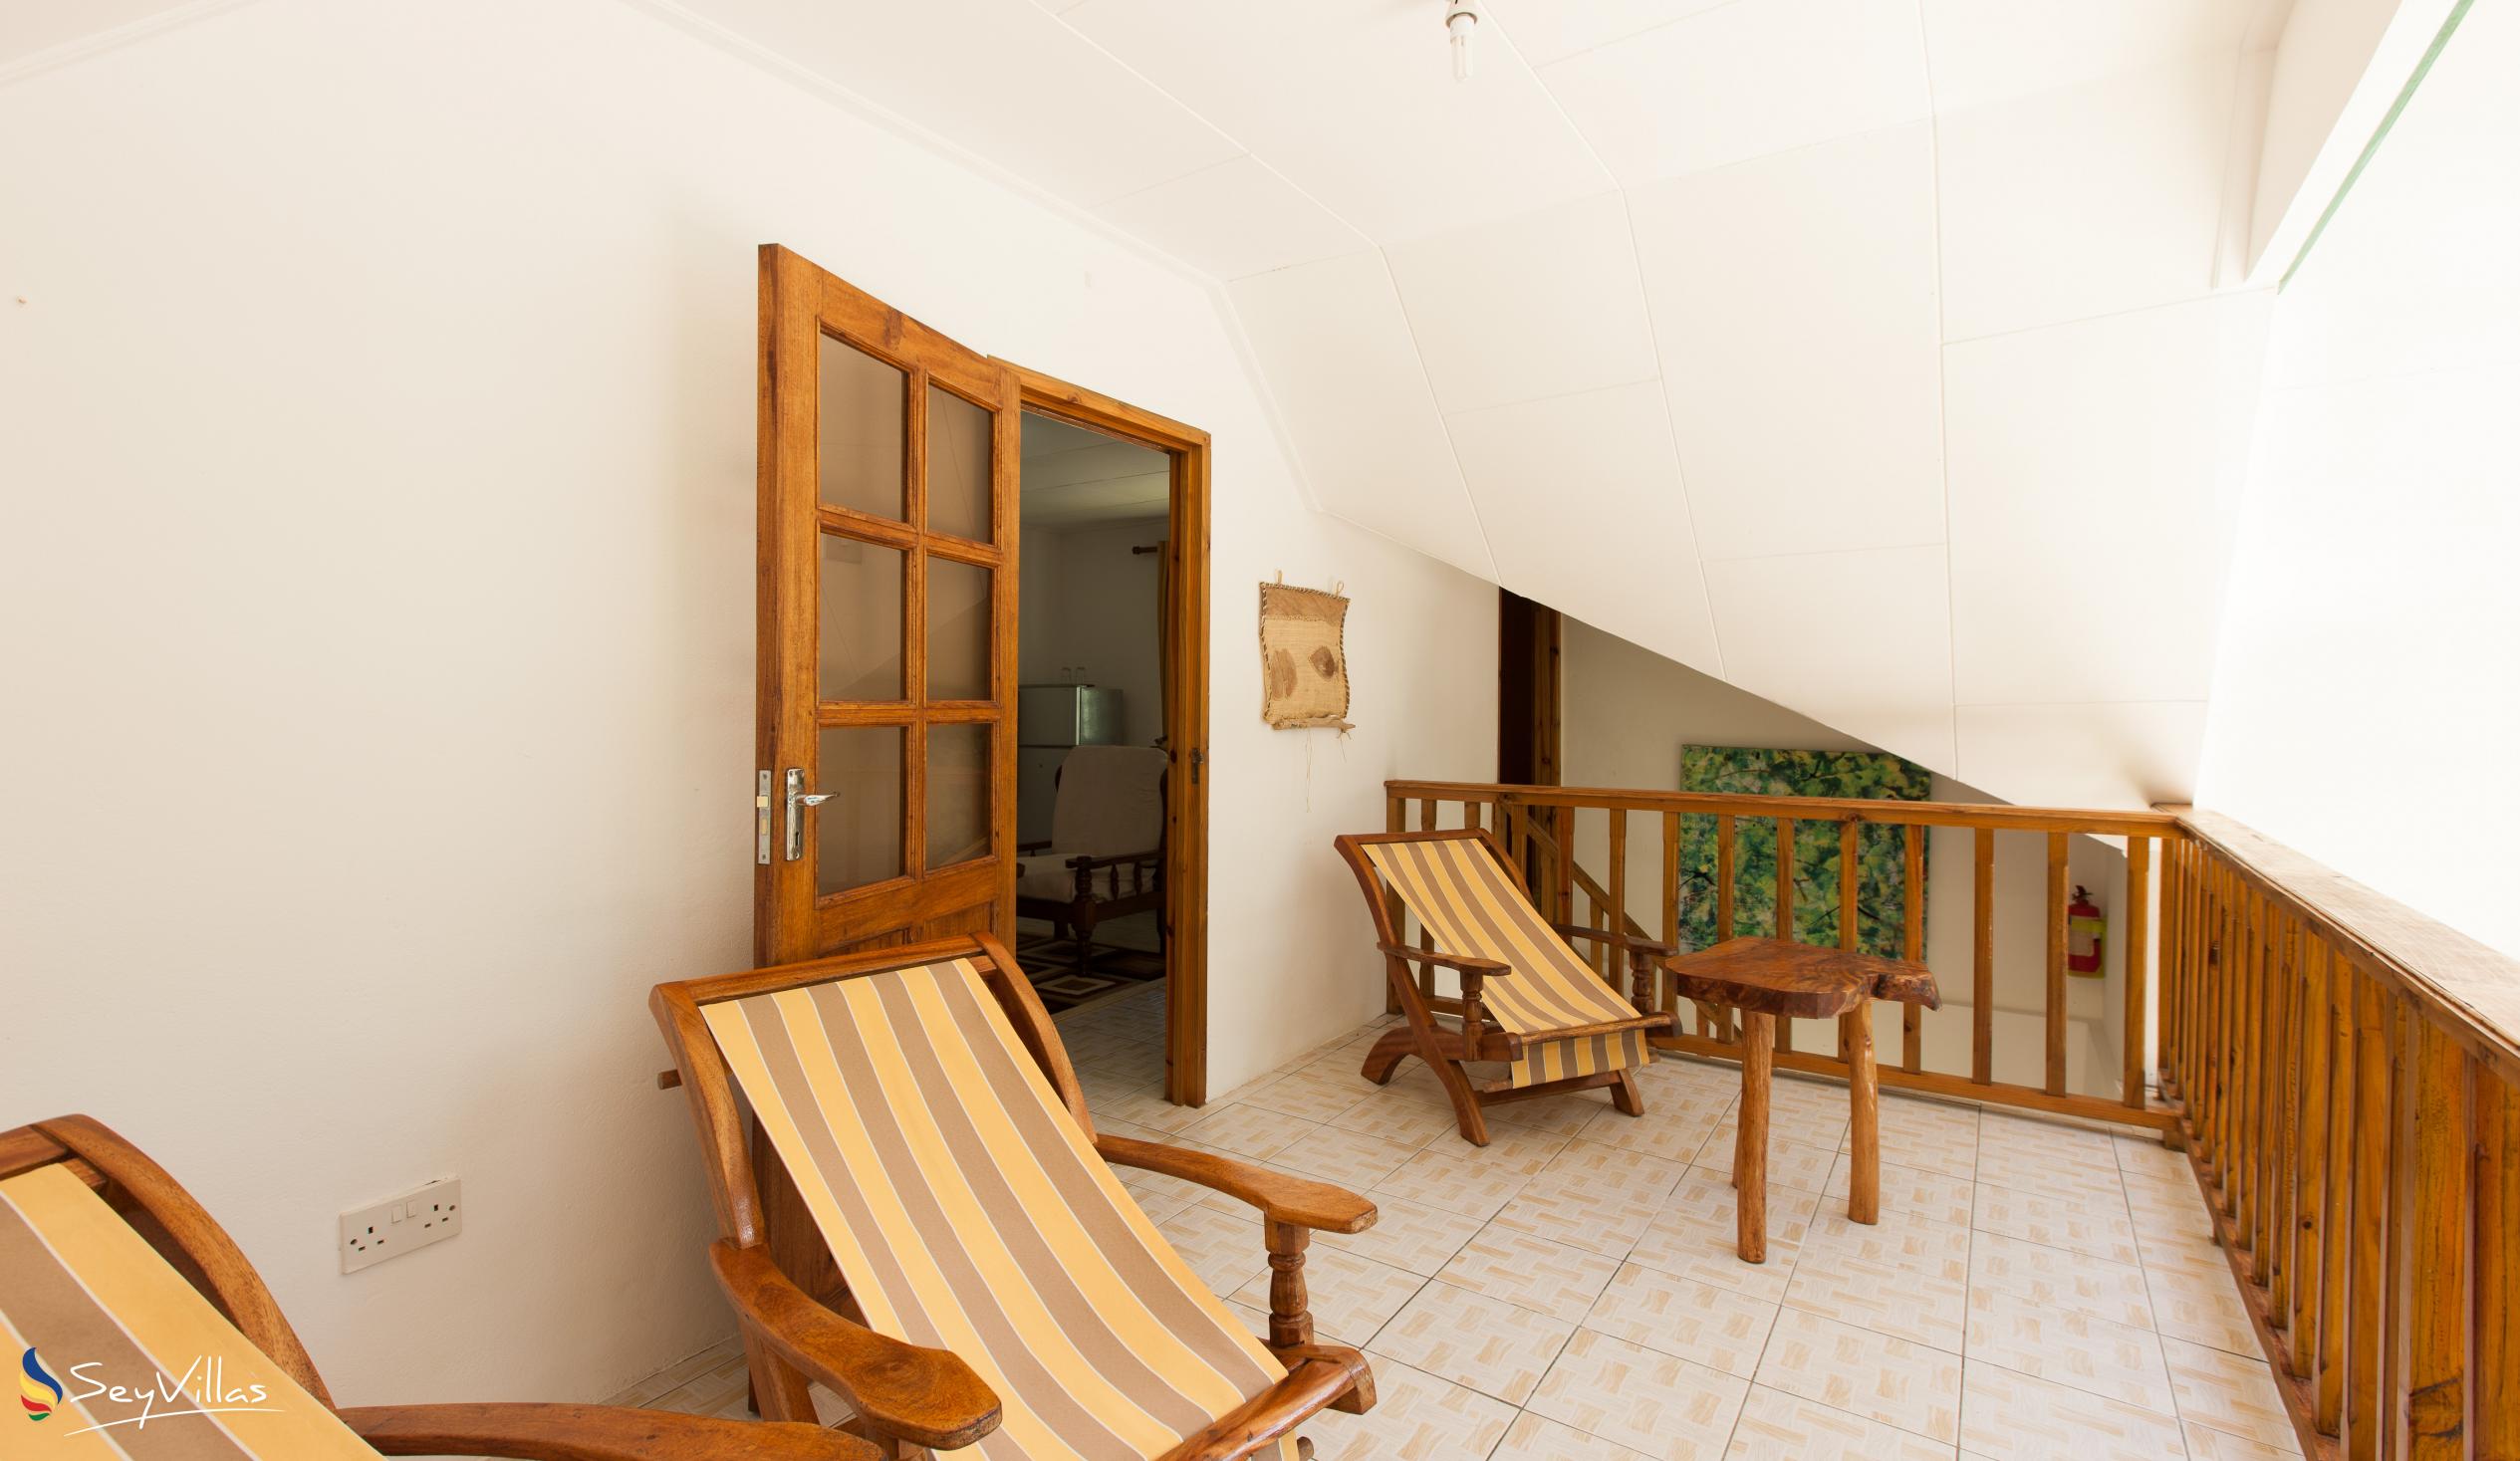 Photo 47: Tannette's Villa - Indoor area - La Digue (Seychelles)